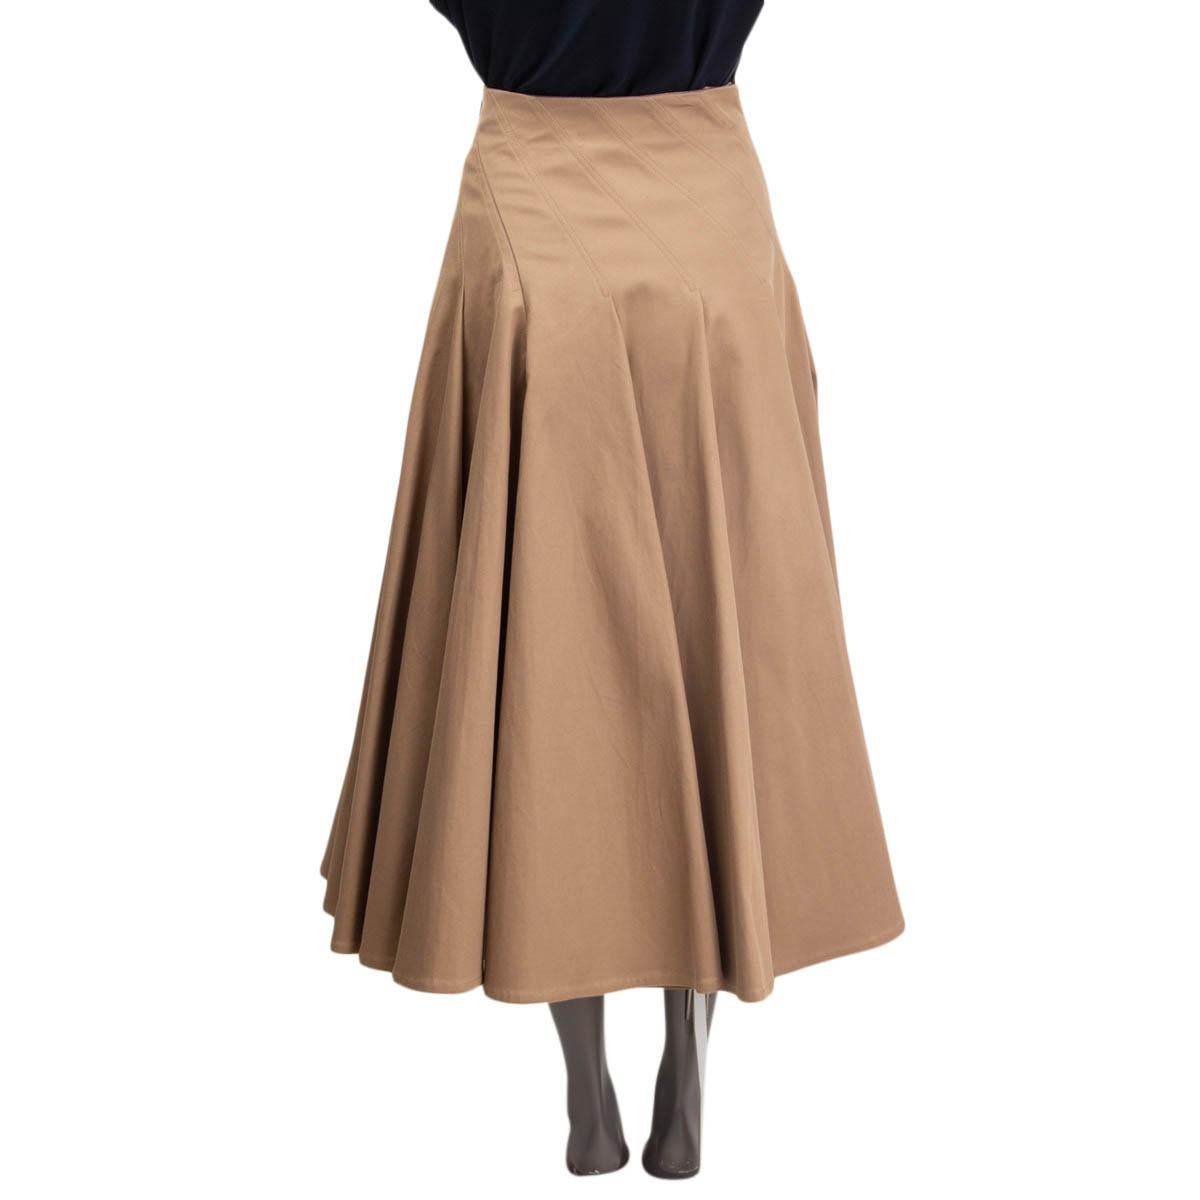 dior skirt brown